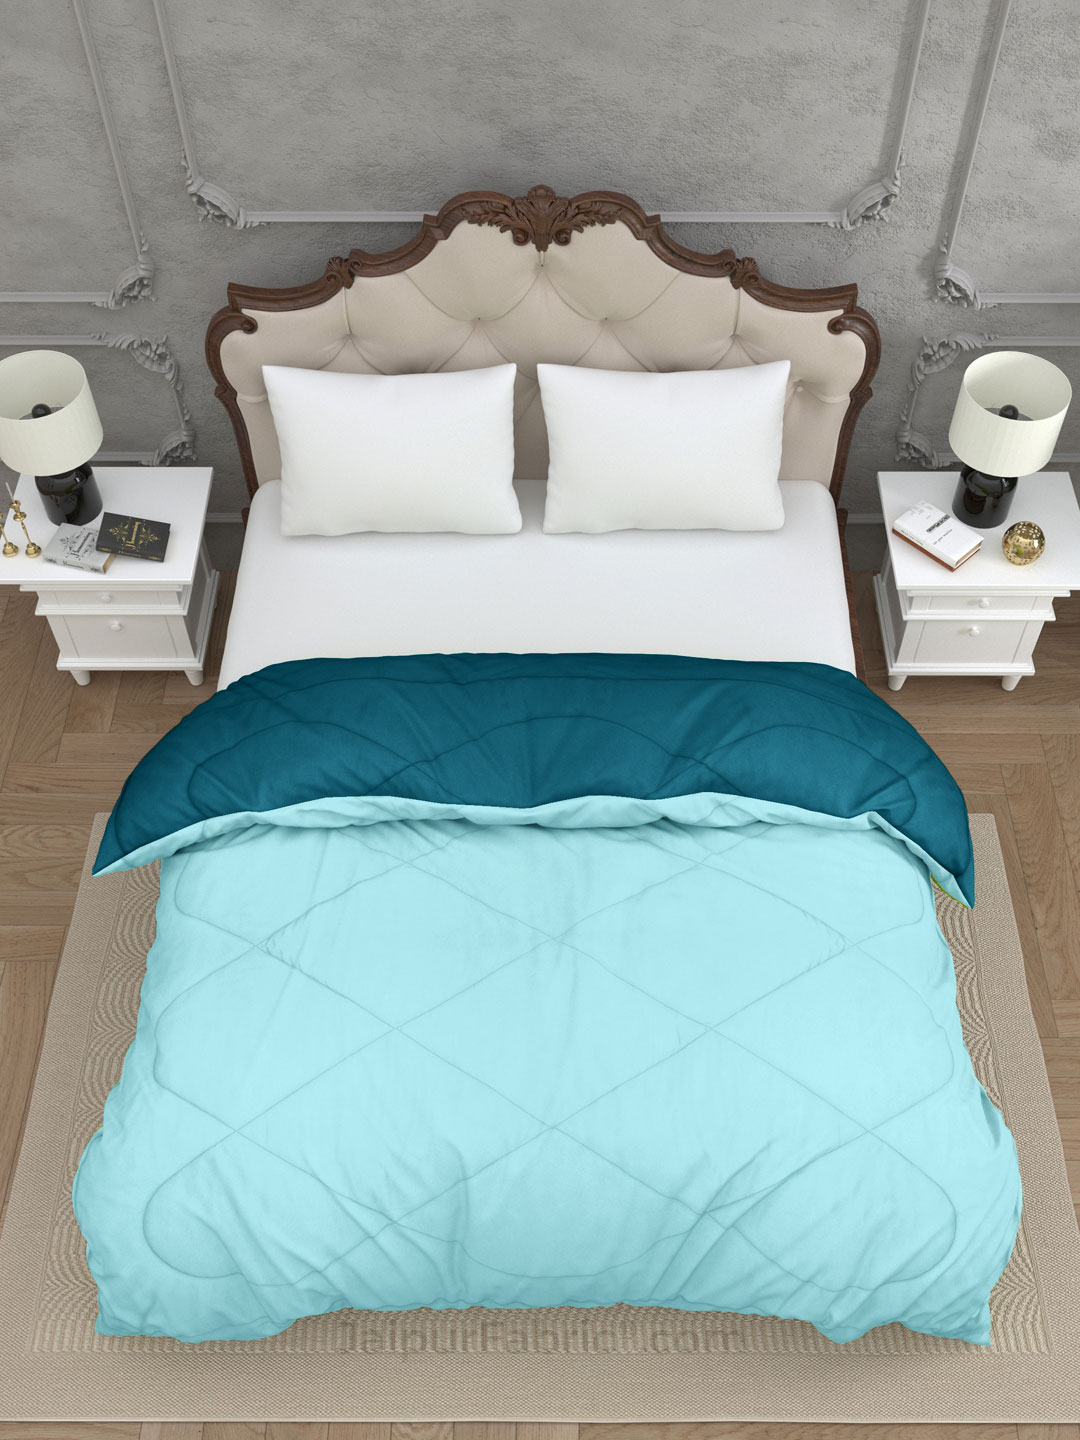 Teal Blue-Ocean Blue Double Bed Comforter